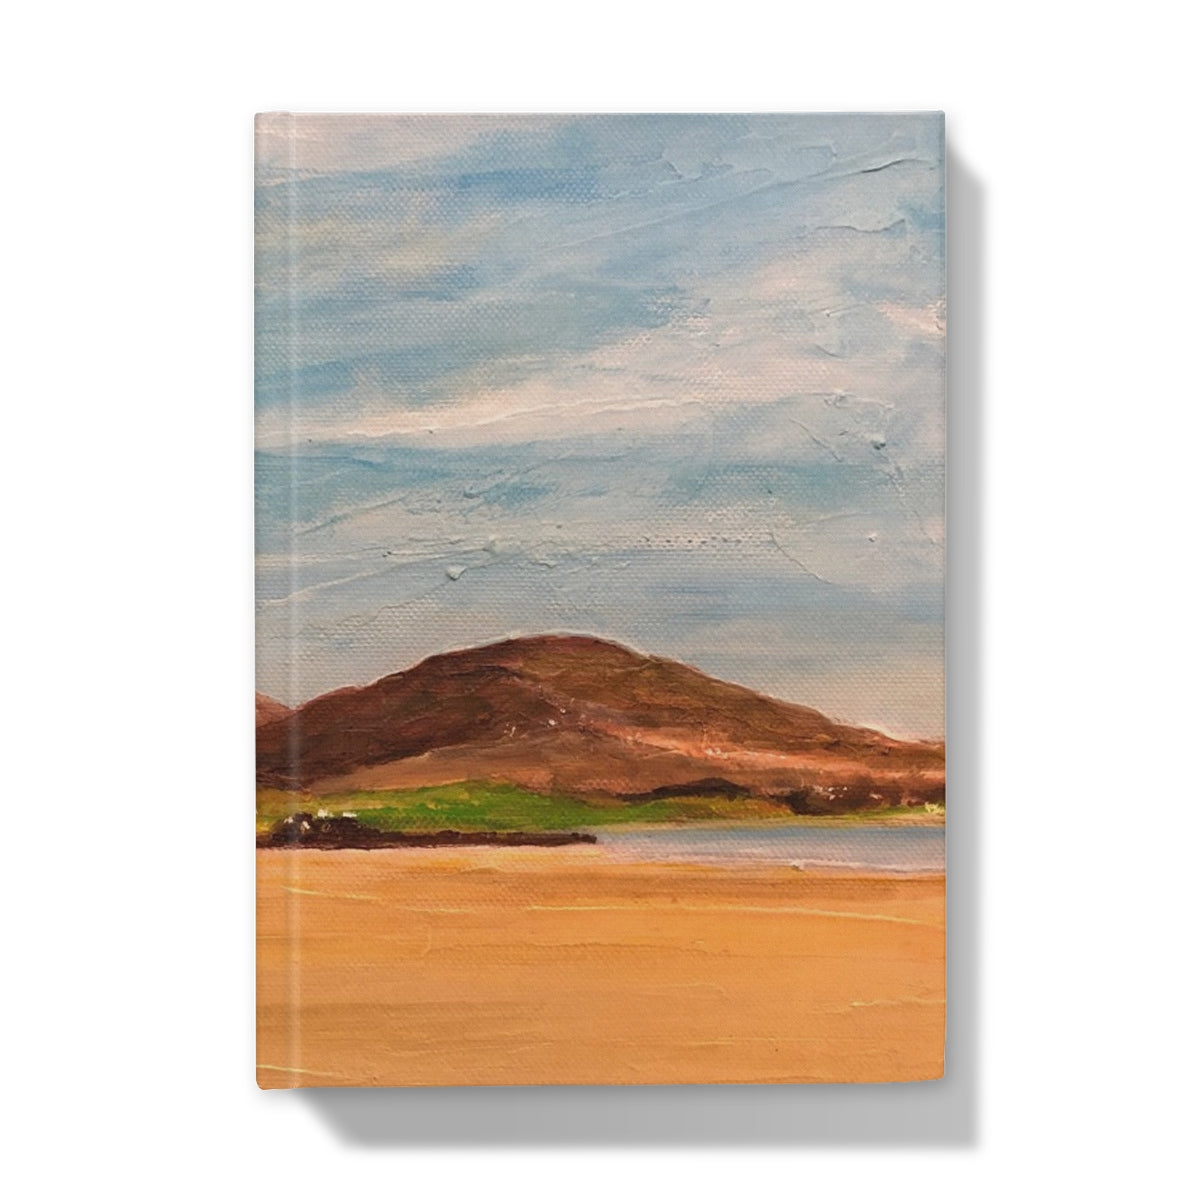 Uig Sands Lewis Art Gifts Hardback Journal-Journals & Notebooks-Hebridean Islands Art Gallery-A5-Plain-Paintings, Prints, Homeware, Art Gifts From Scotland By Scottish Artist Kevin Hunter